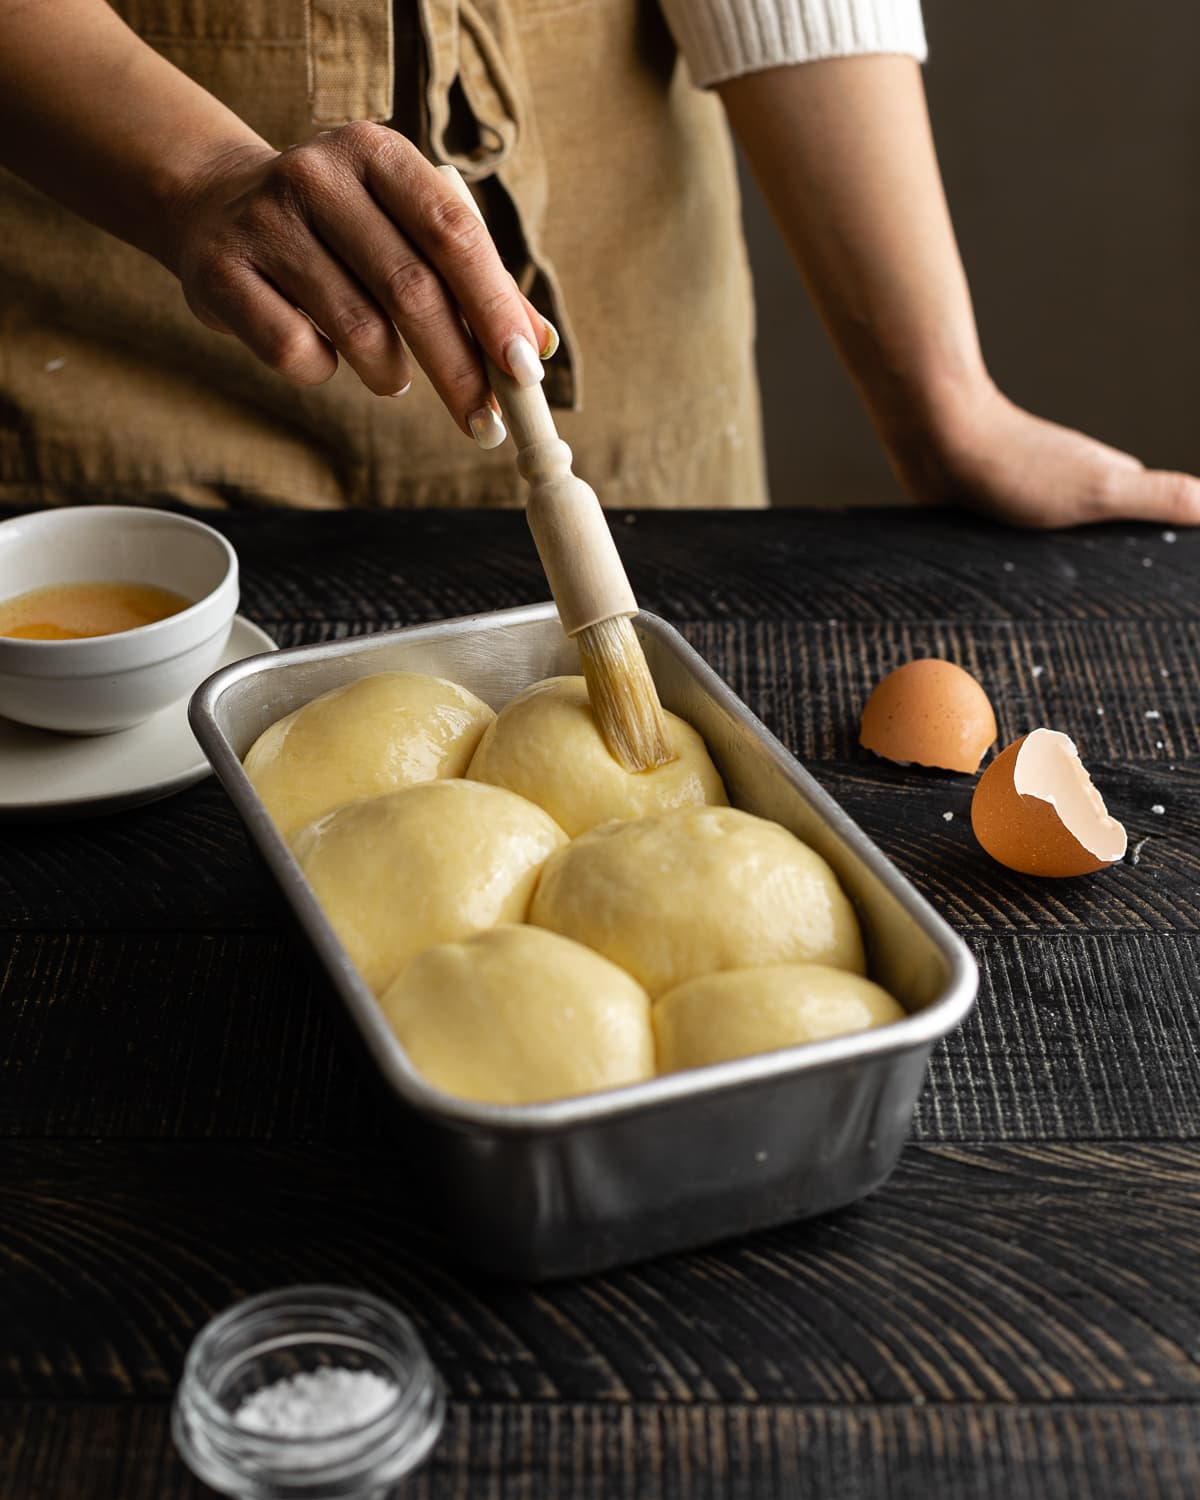 Hand holding pastry brush brushing egg wash on dough inside loaf pan